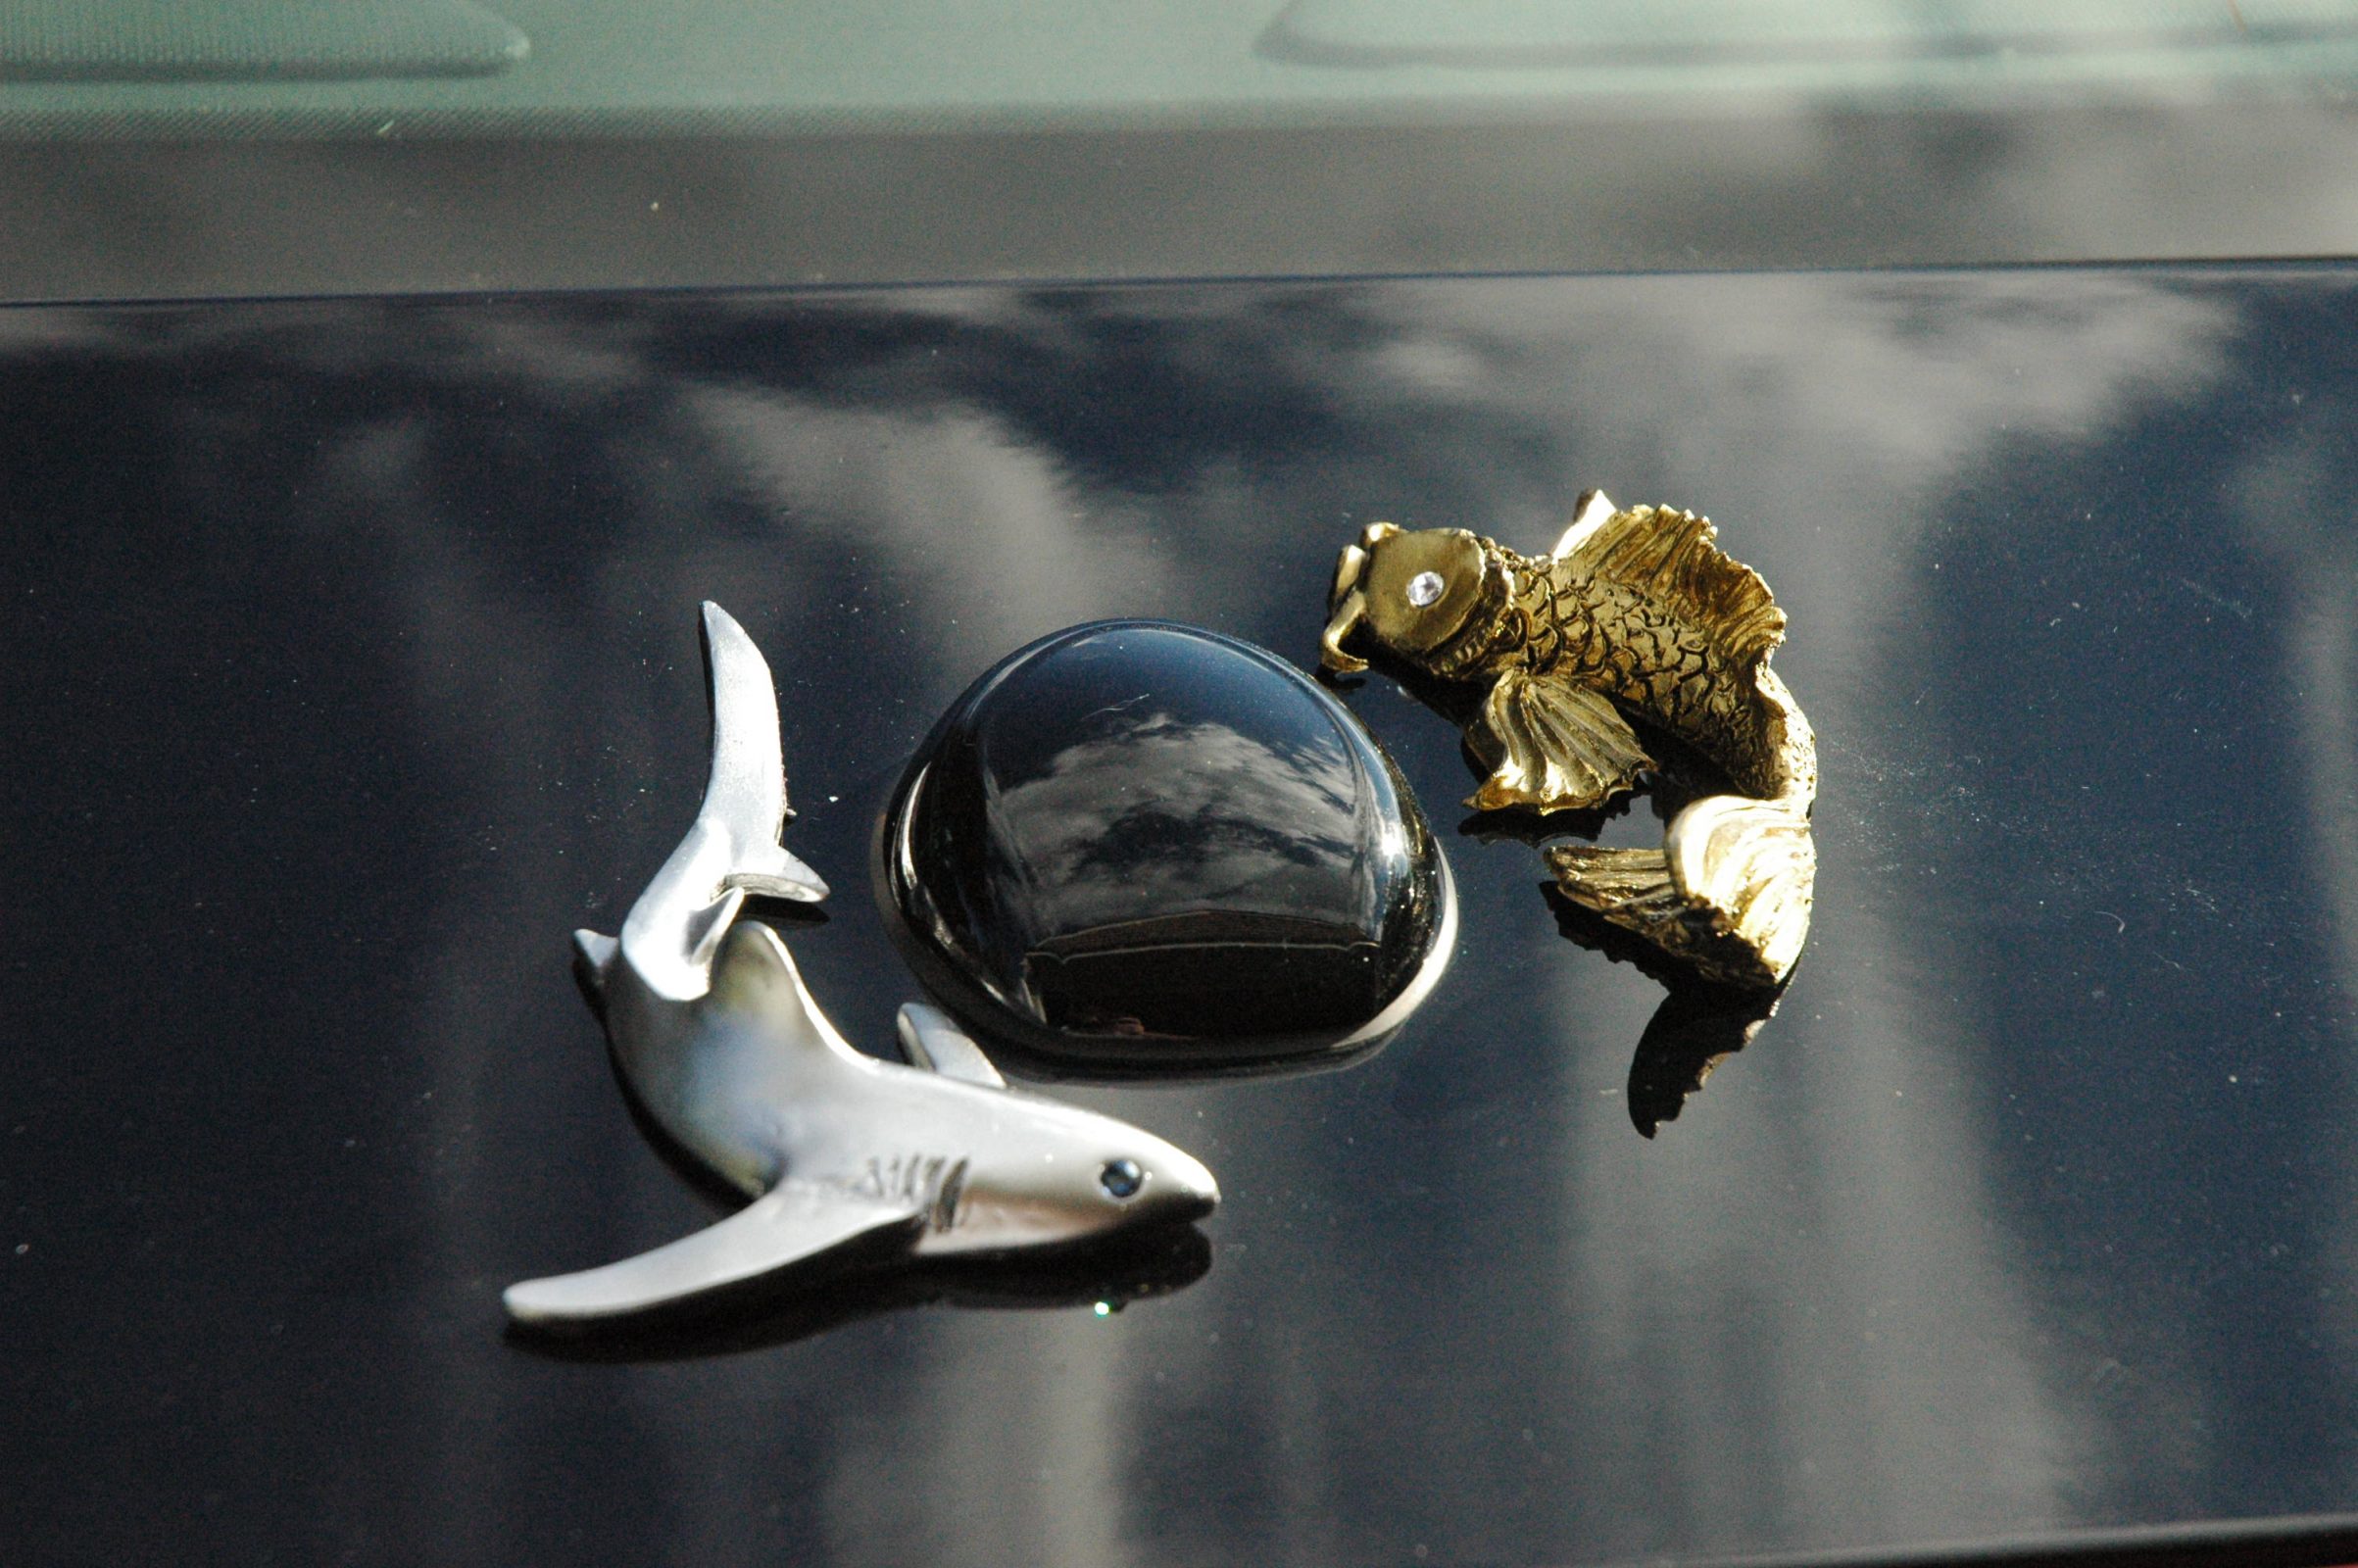 Shark and Koi fish car accessory made by car jewel